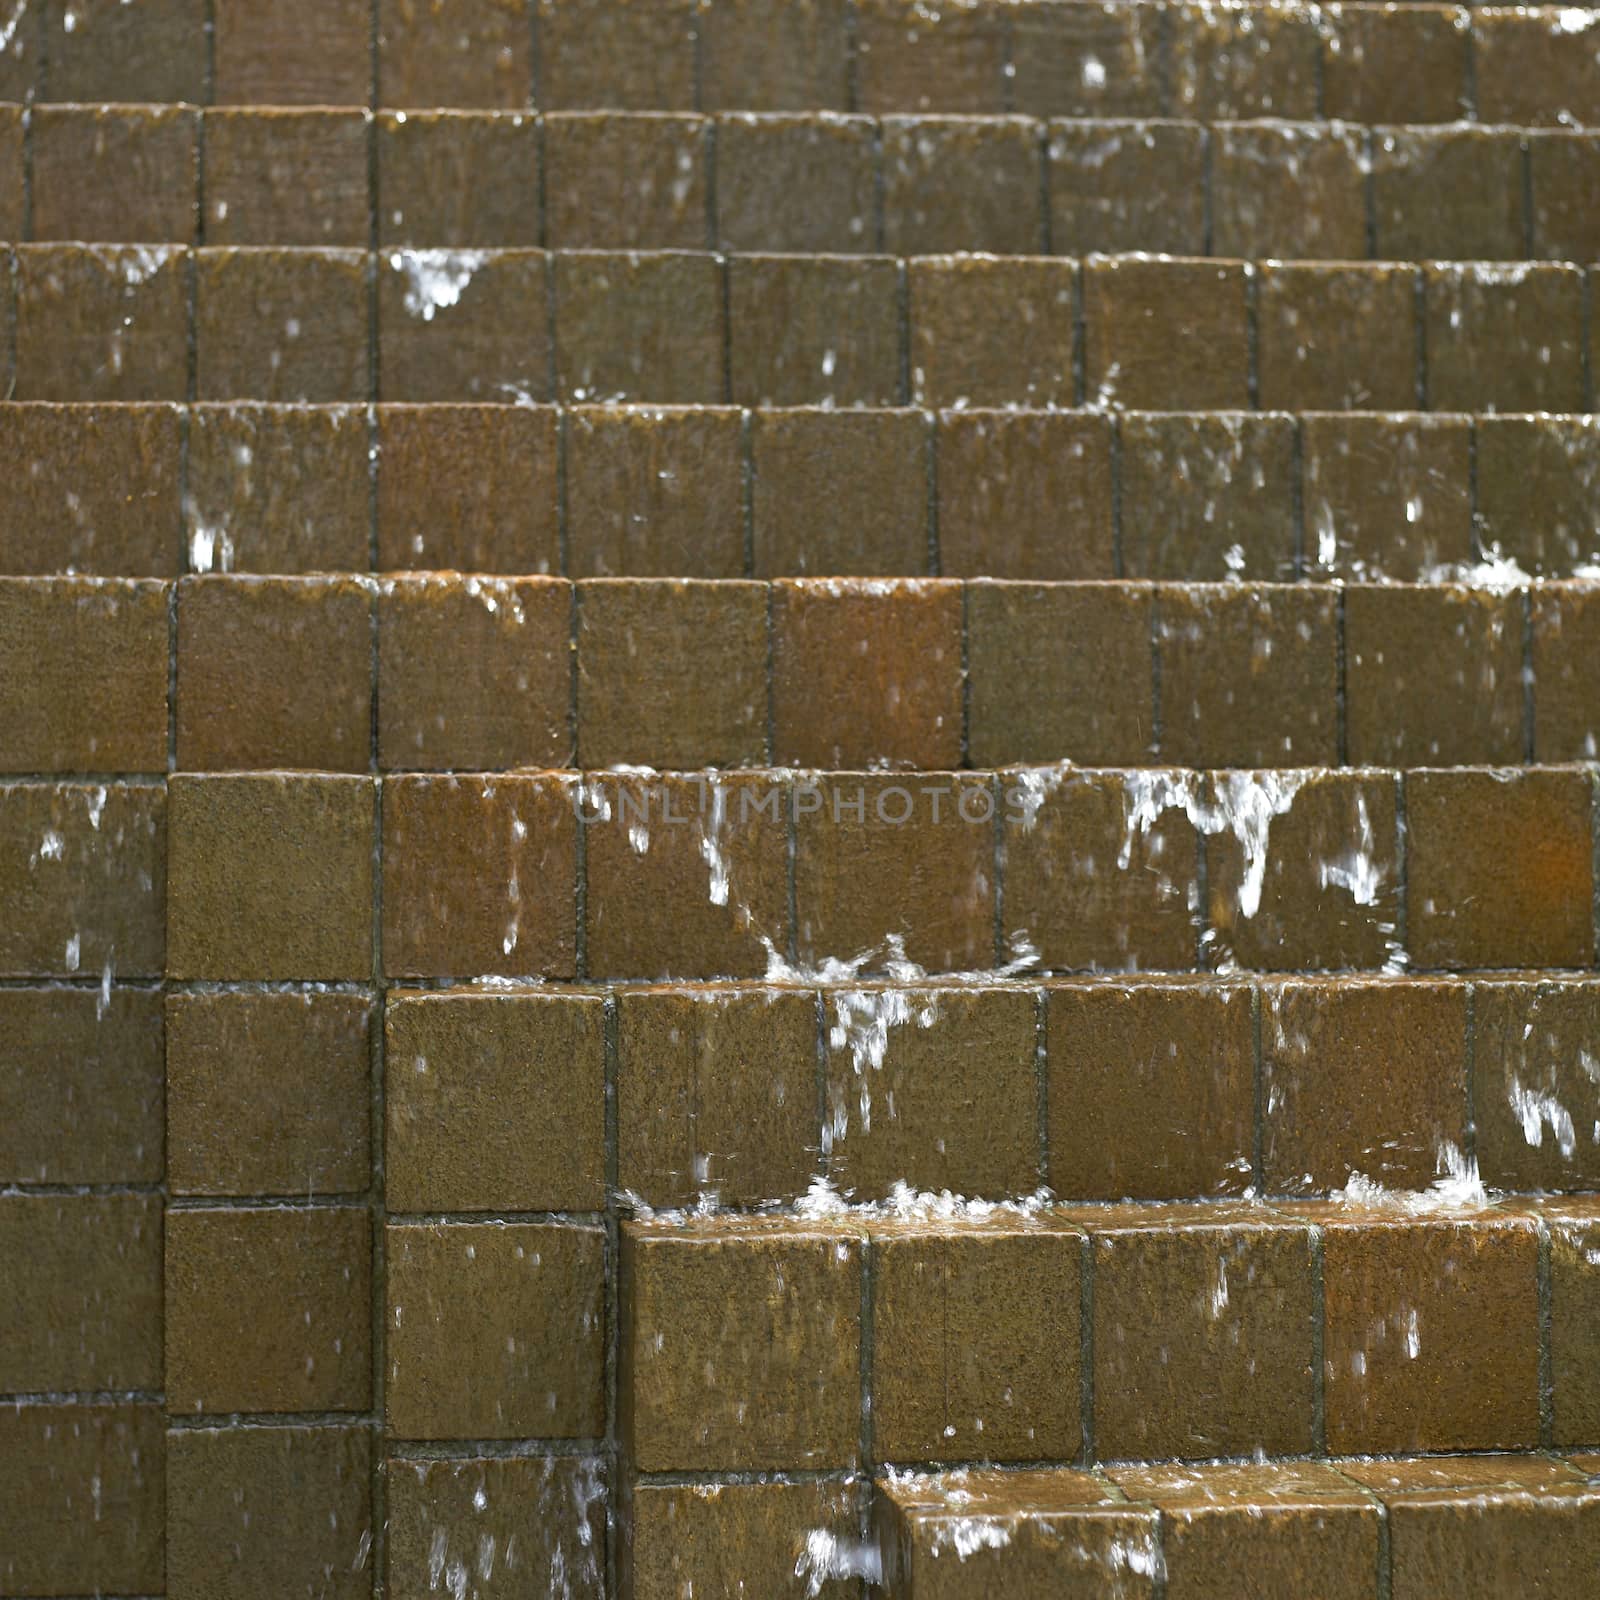 Water falling down on brown bricks